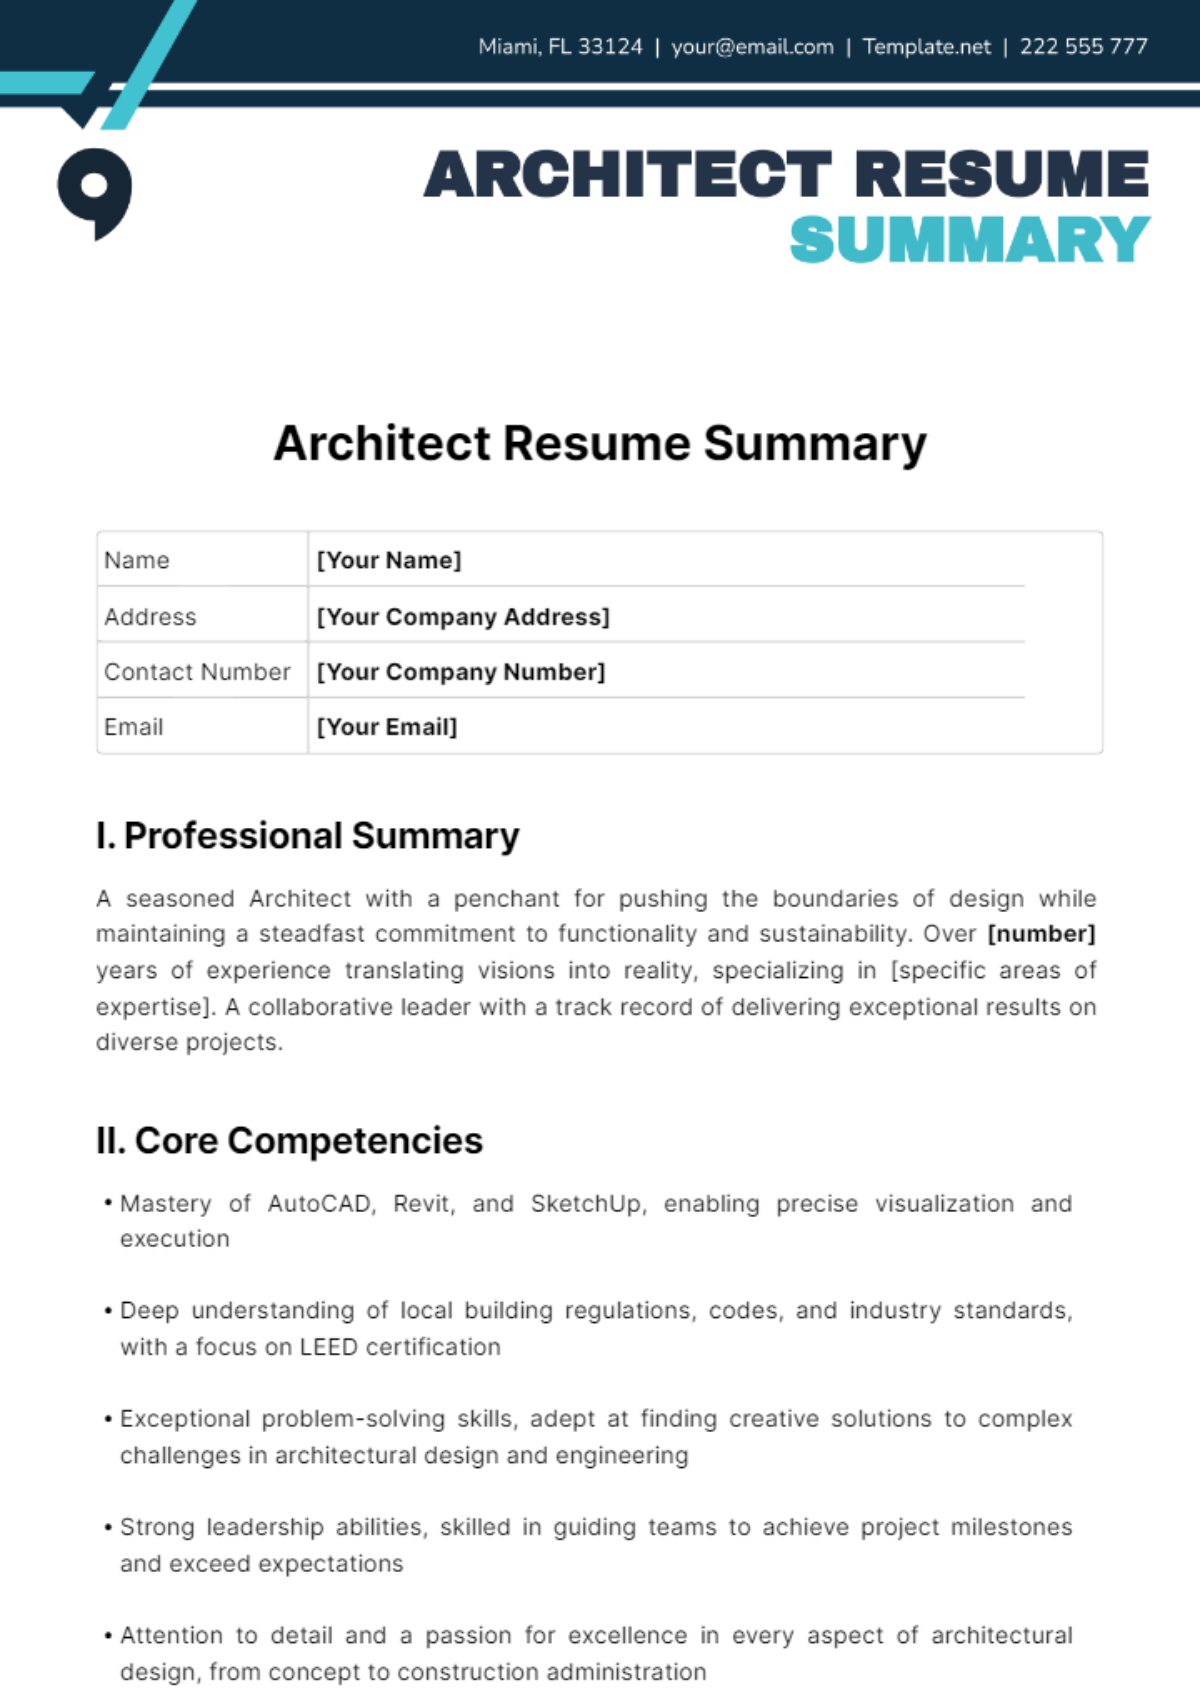 Free Architect Resume Summary Template